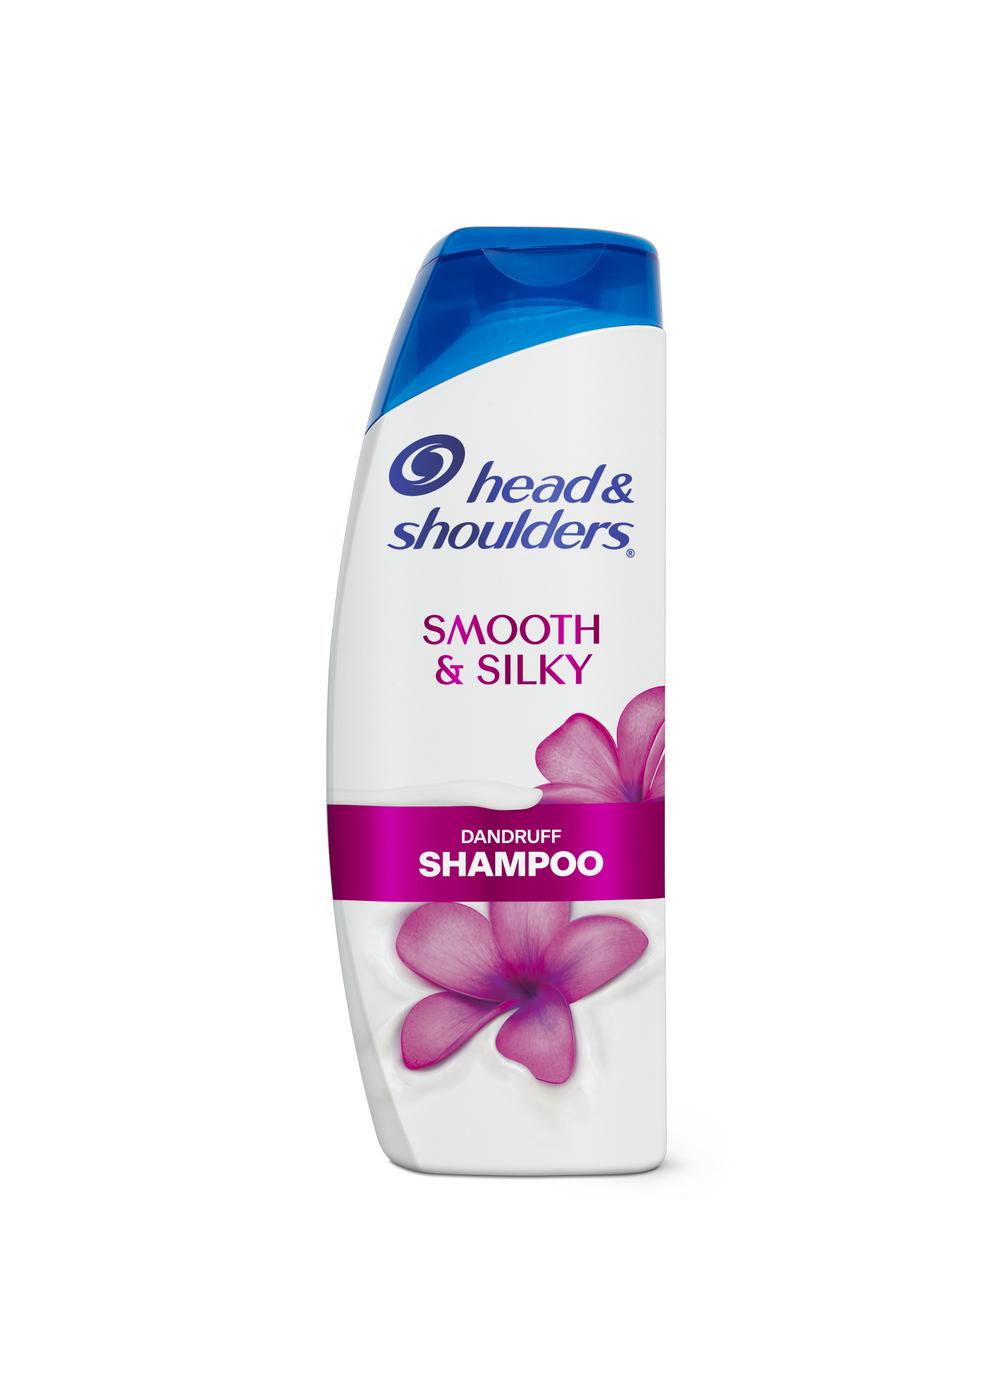 Head & Shoulders Dandruff Shampoo - Smooth & Silky; image 5 of 11